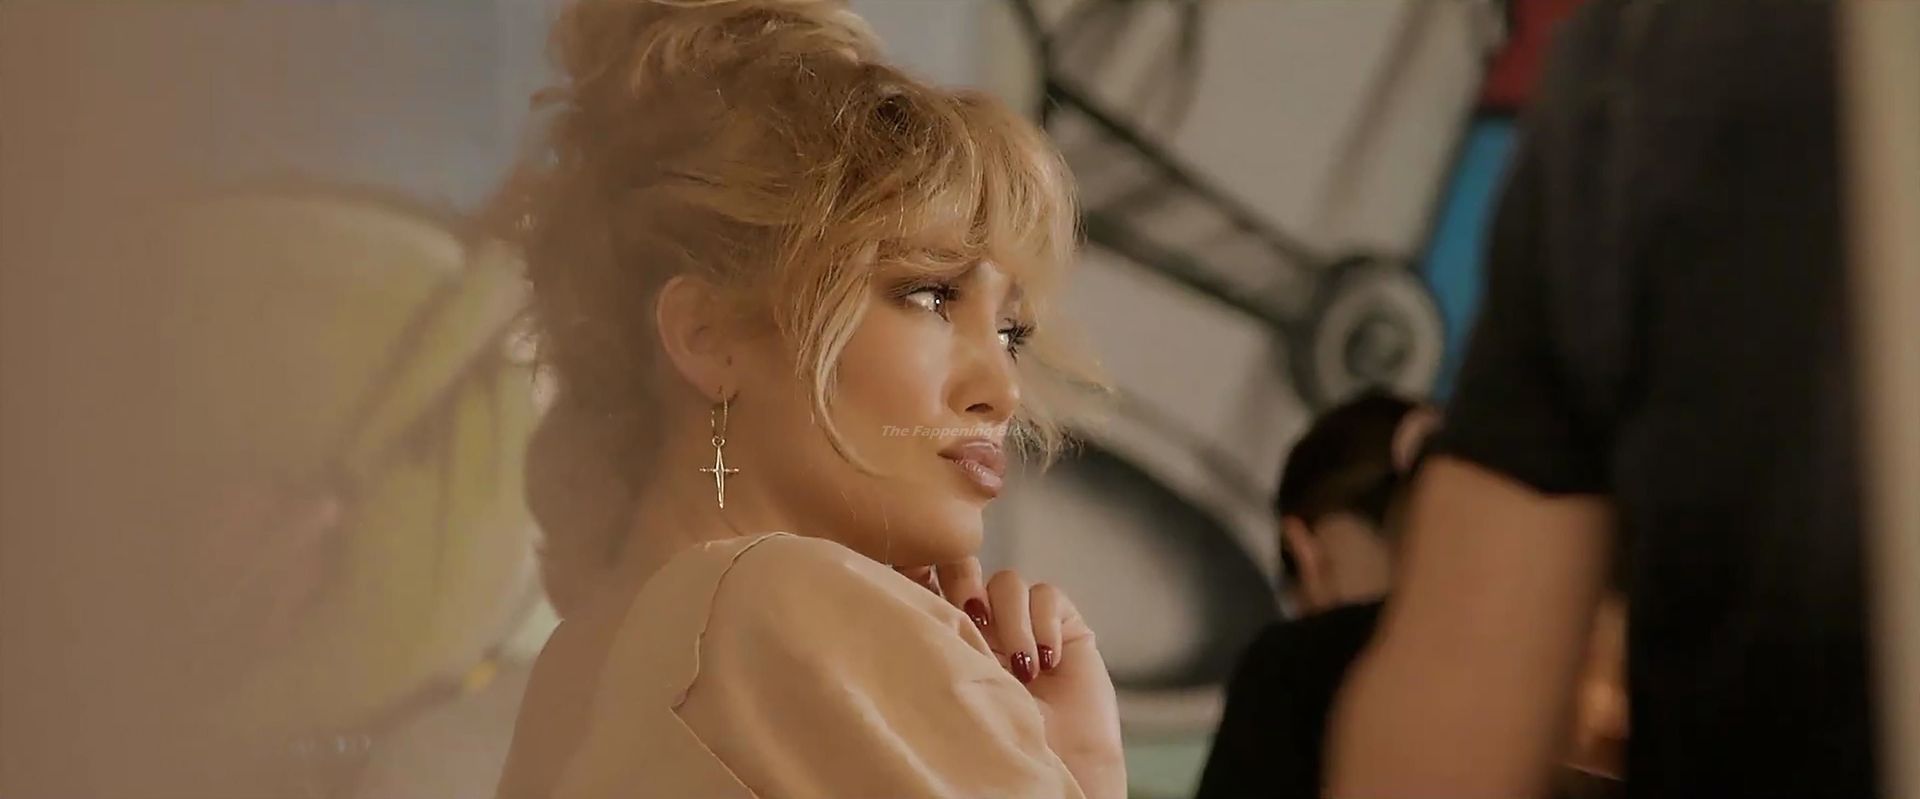 Jennifer-Lopez-Sexy-The-Fappening-Blog-54.jpg